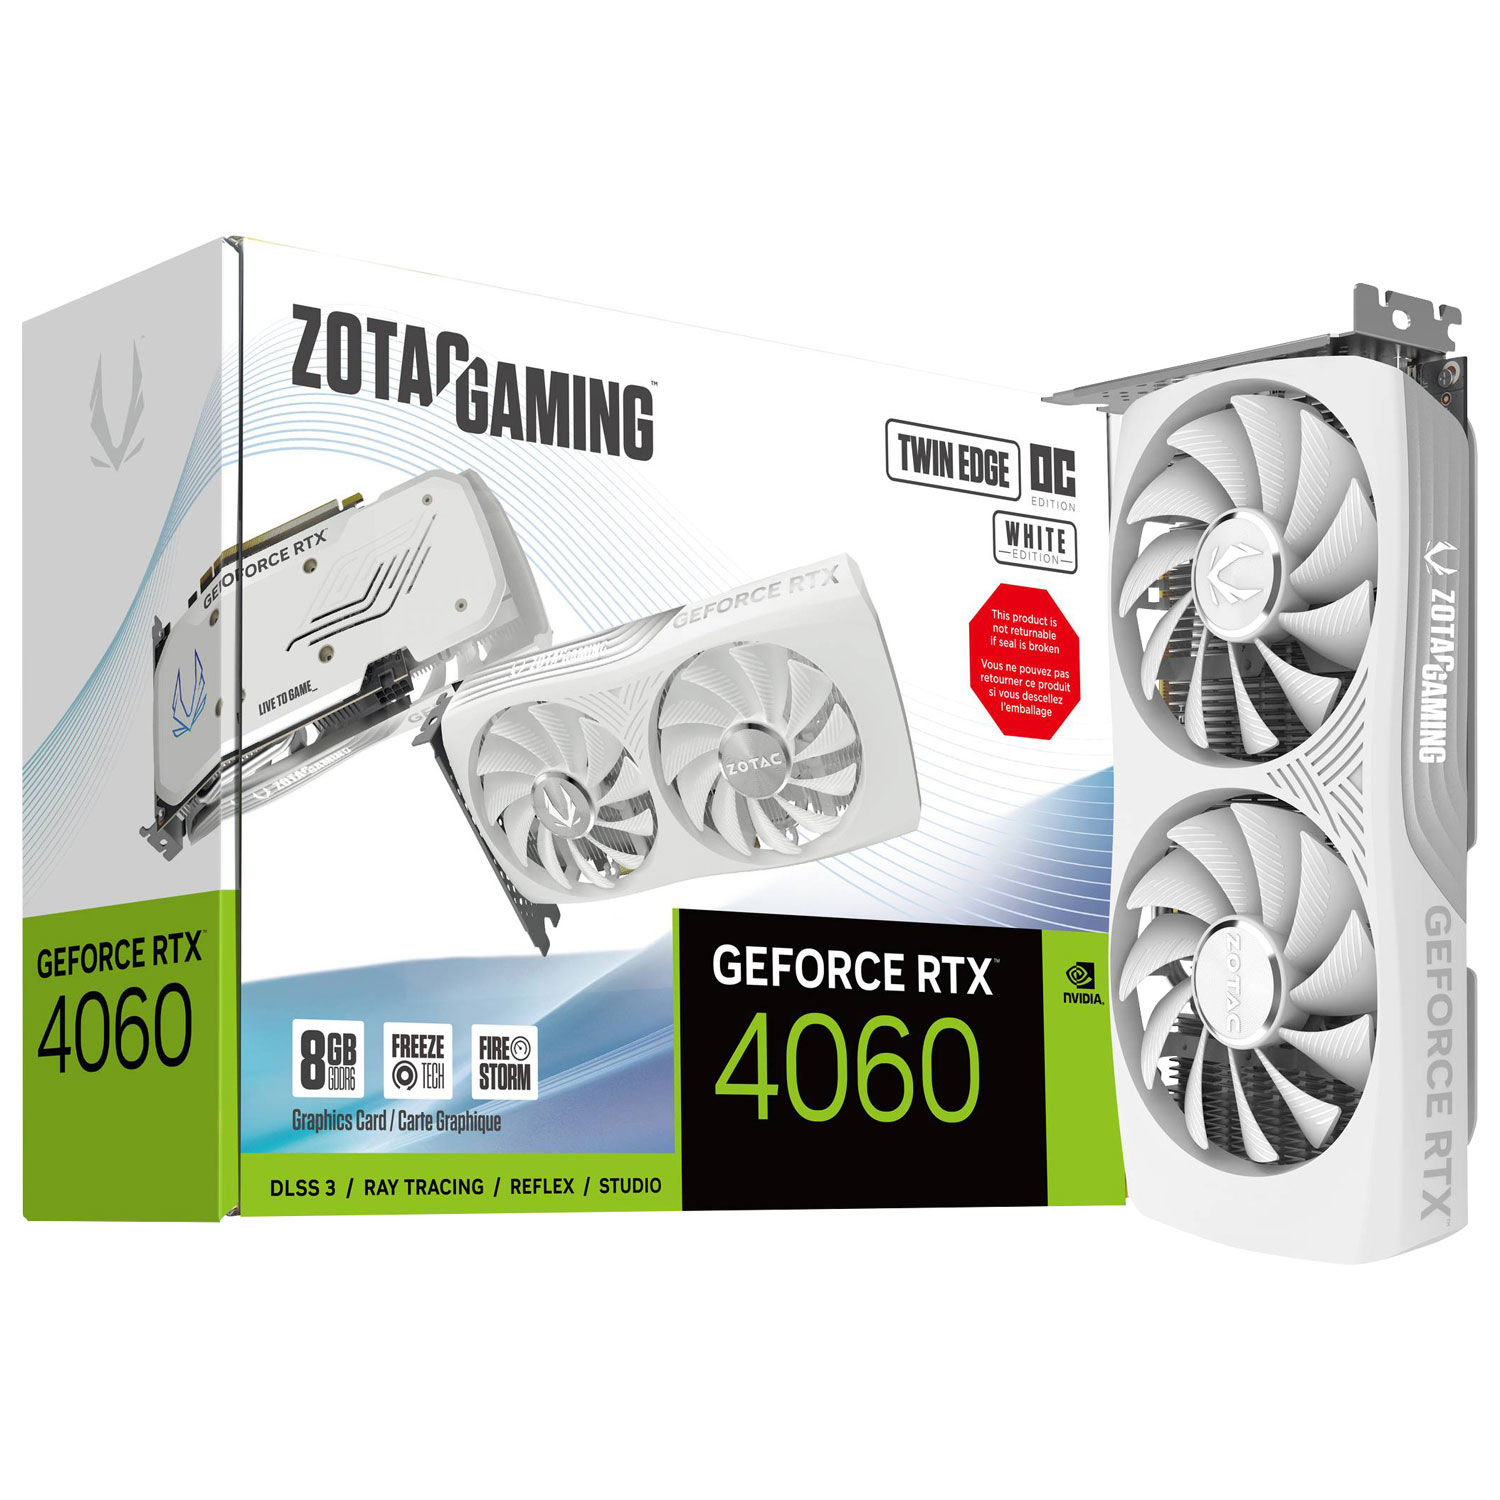 ZOTAC Gaming NVIDIA GeForce RTX 4060 GPU 8GB GDDR6 Video Card